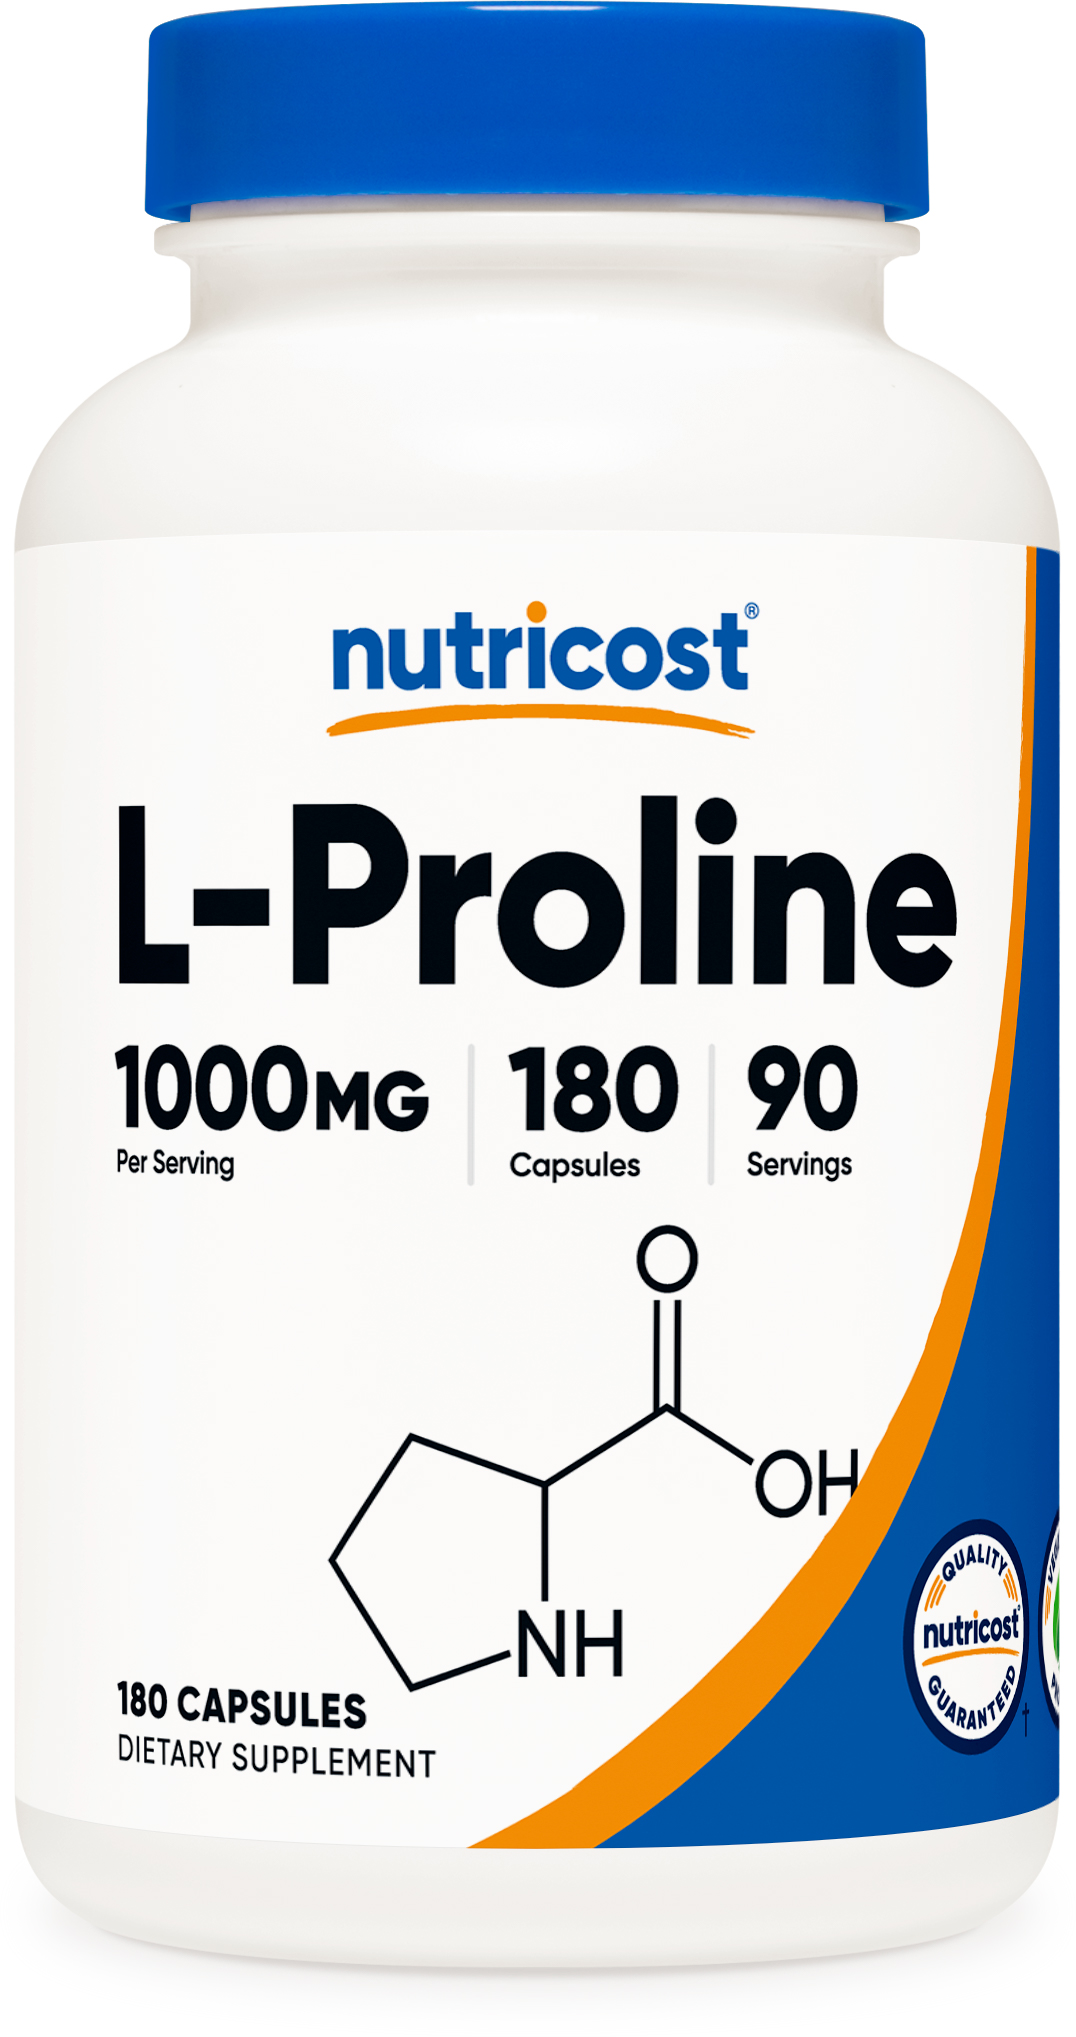 nutricost l-proline 1000mg 180 capsules 90 servings bottle